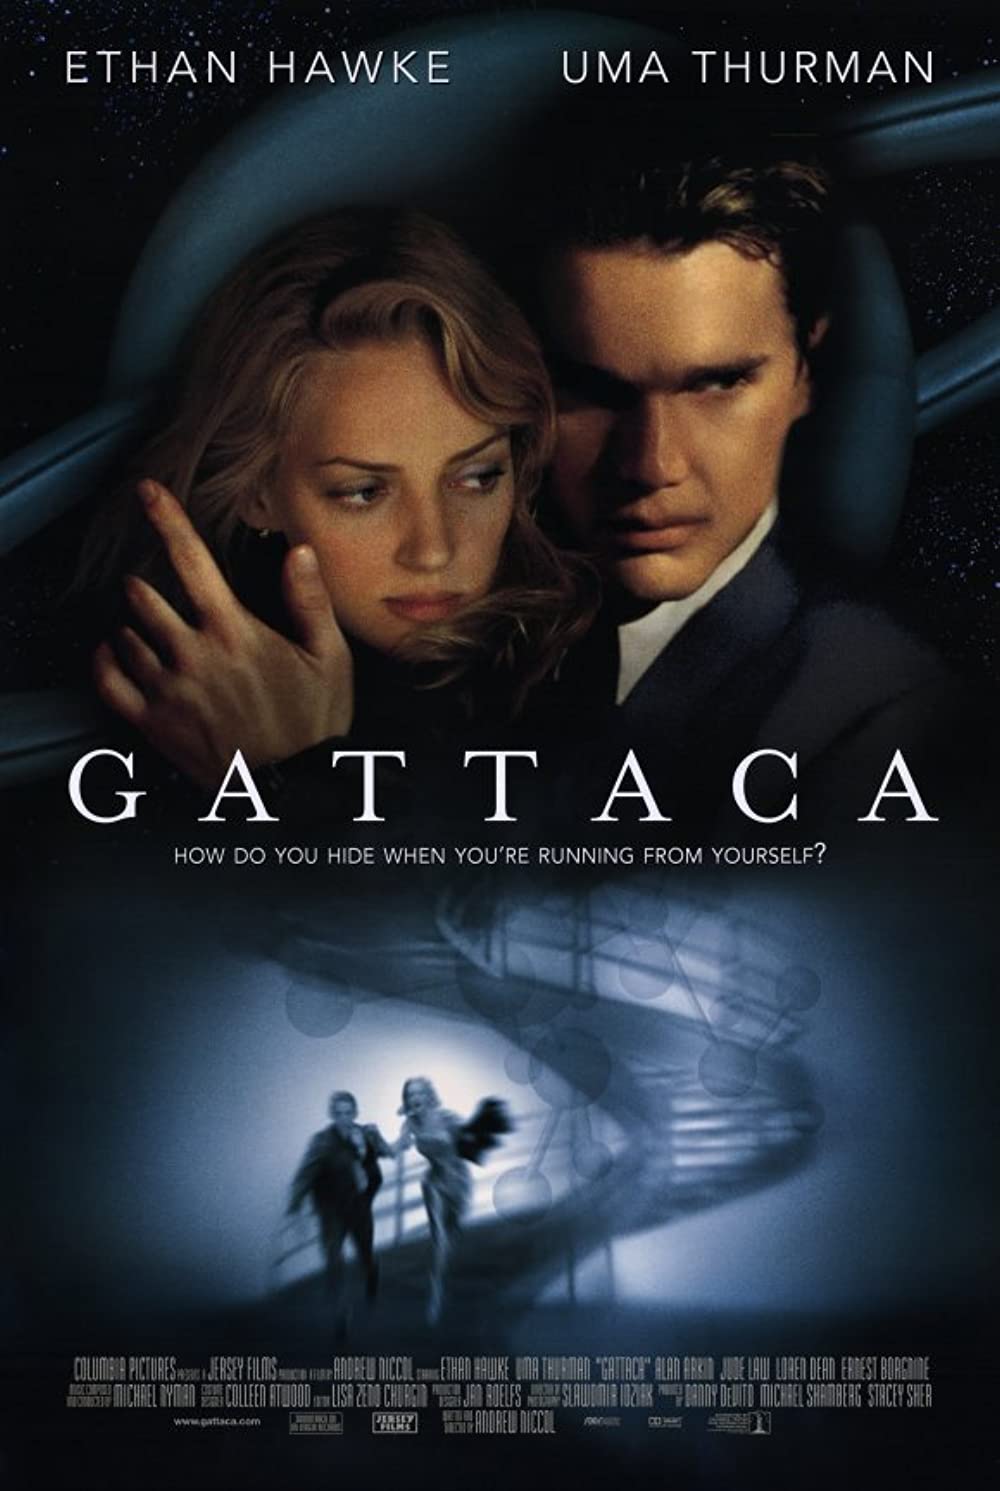 Stiahni si Filmy CZ/SK dabing Gattaca (1997)(Mastered)(Hevc)(1080p)(BluRay)(English-CZ)  = CSFD 83%